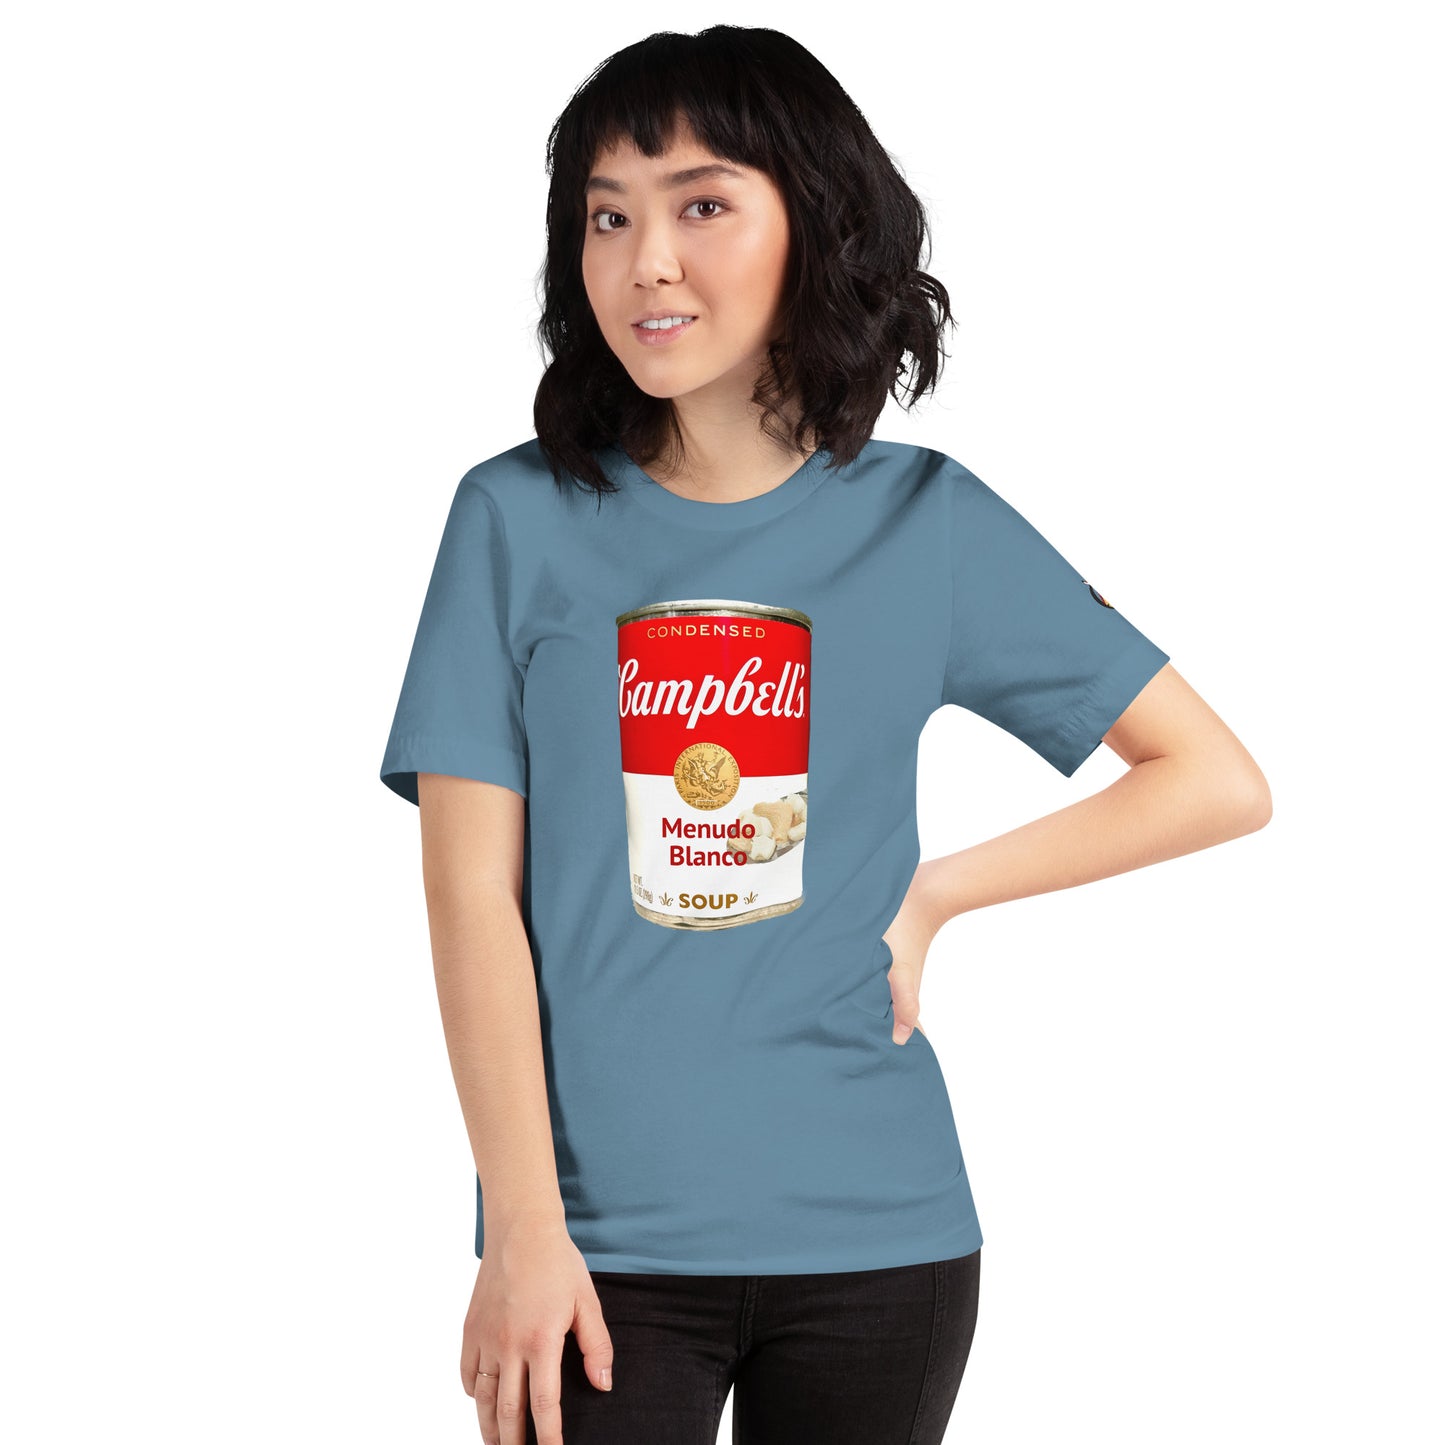 Snooty Fox Art Unisex T-shirt - Campbells Soup Menudo Blanco